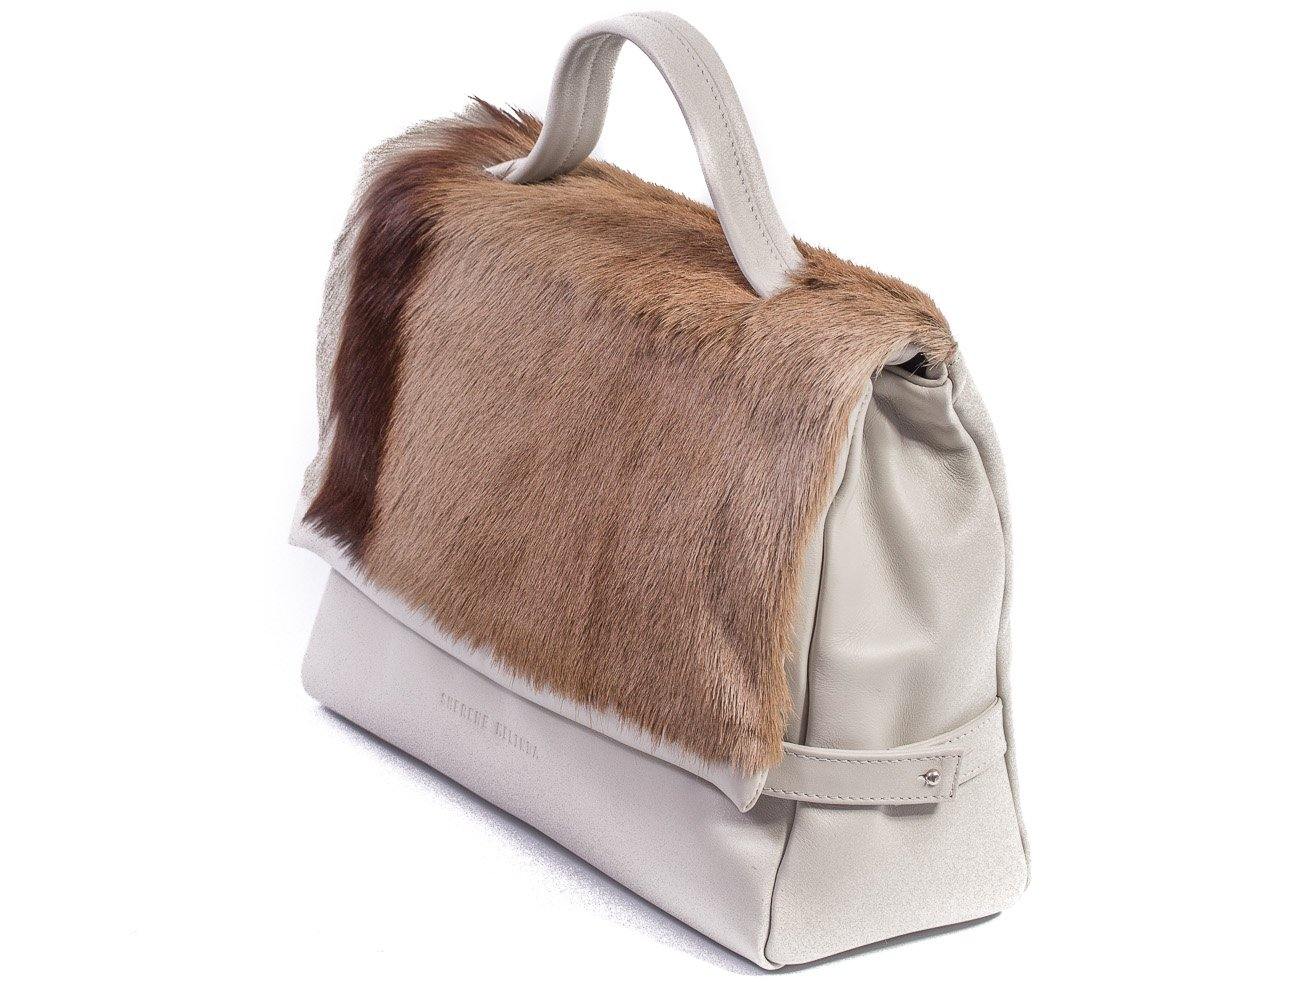 sherene melinda springbok hair-on-hide earth leather smith tote bag Stripe side angle